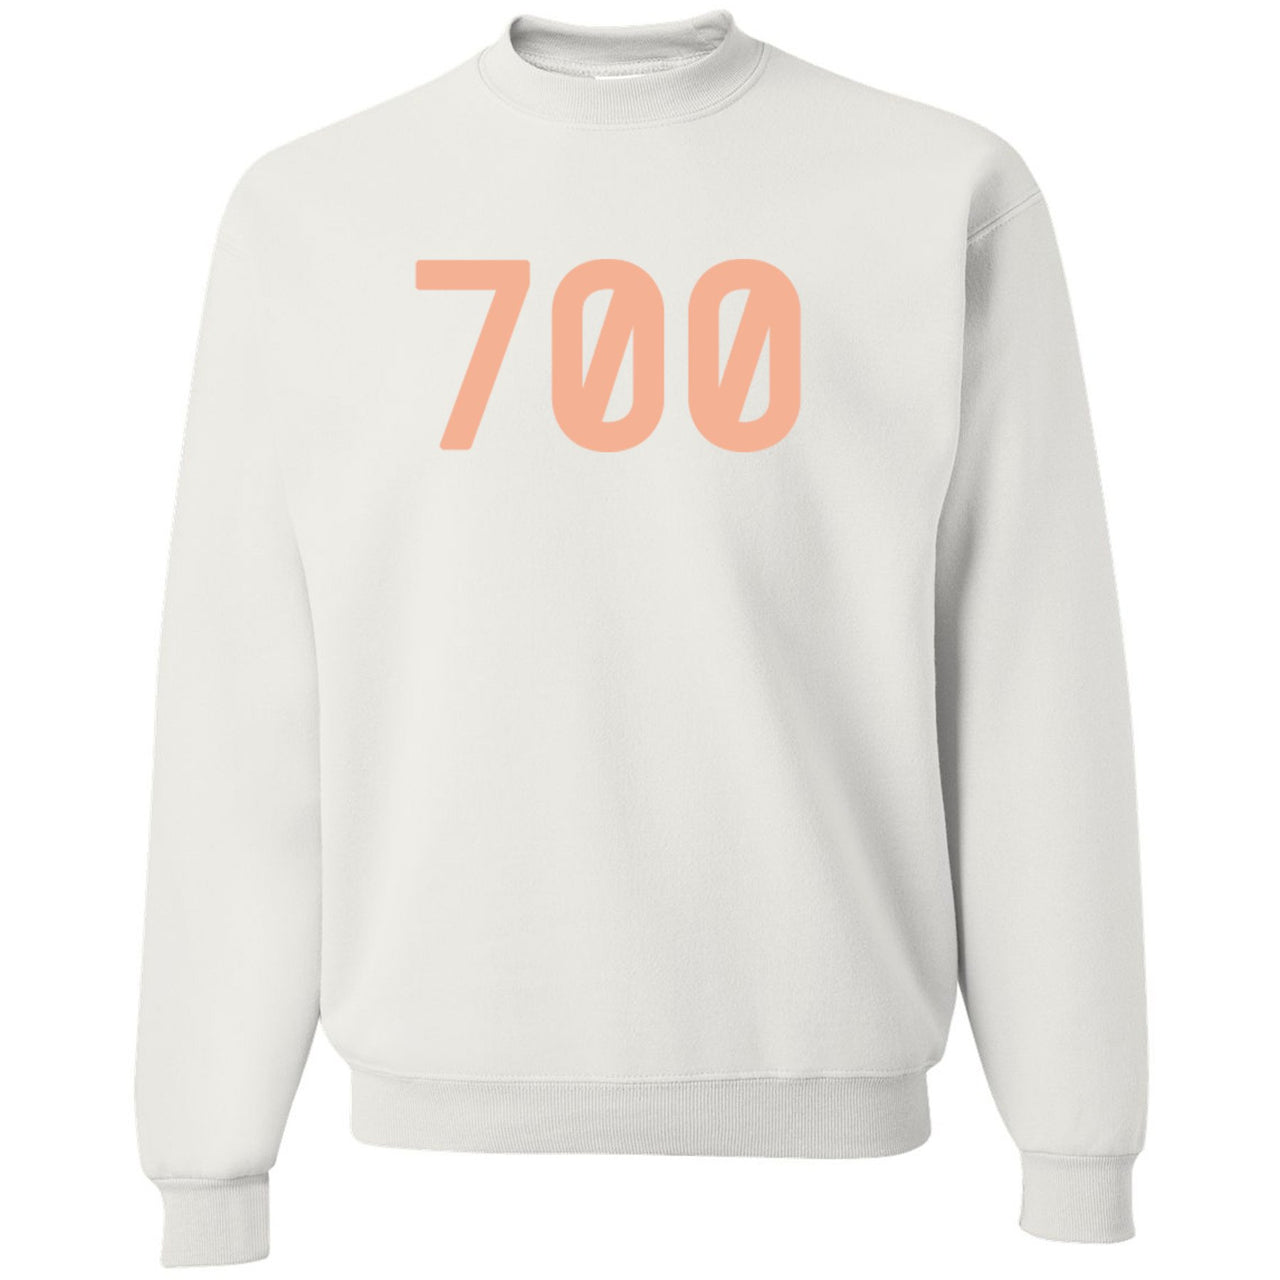 Inertia 700s Crewneck Sweater | 700, White